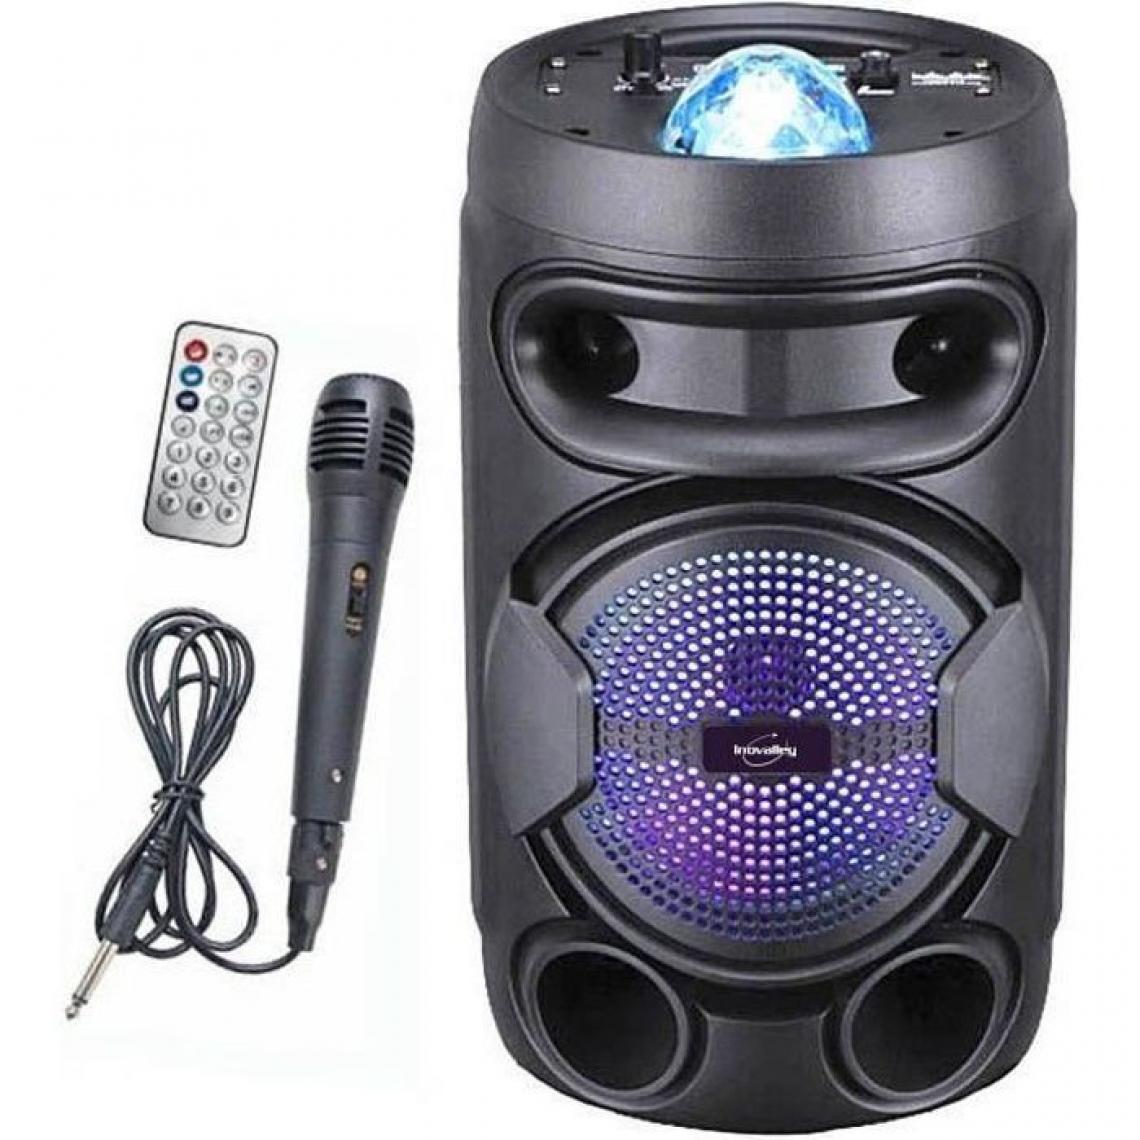 Inovalley - INOVALLEY KA02 BOWL- Enceinte lumineuse Bluetooth 400W - Fonction Karaoke - Boule kaleidoscope LED multicolore - Port USB, Micro - Enceintes Hifi